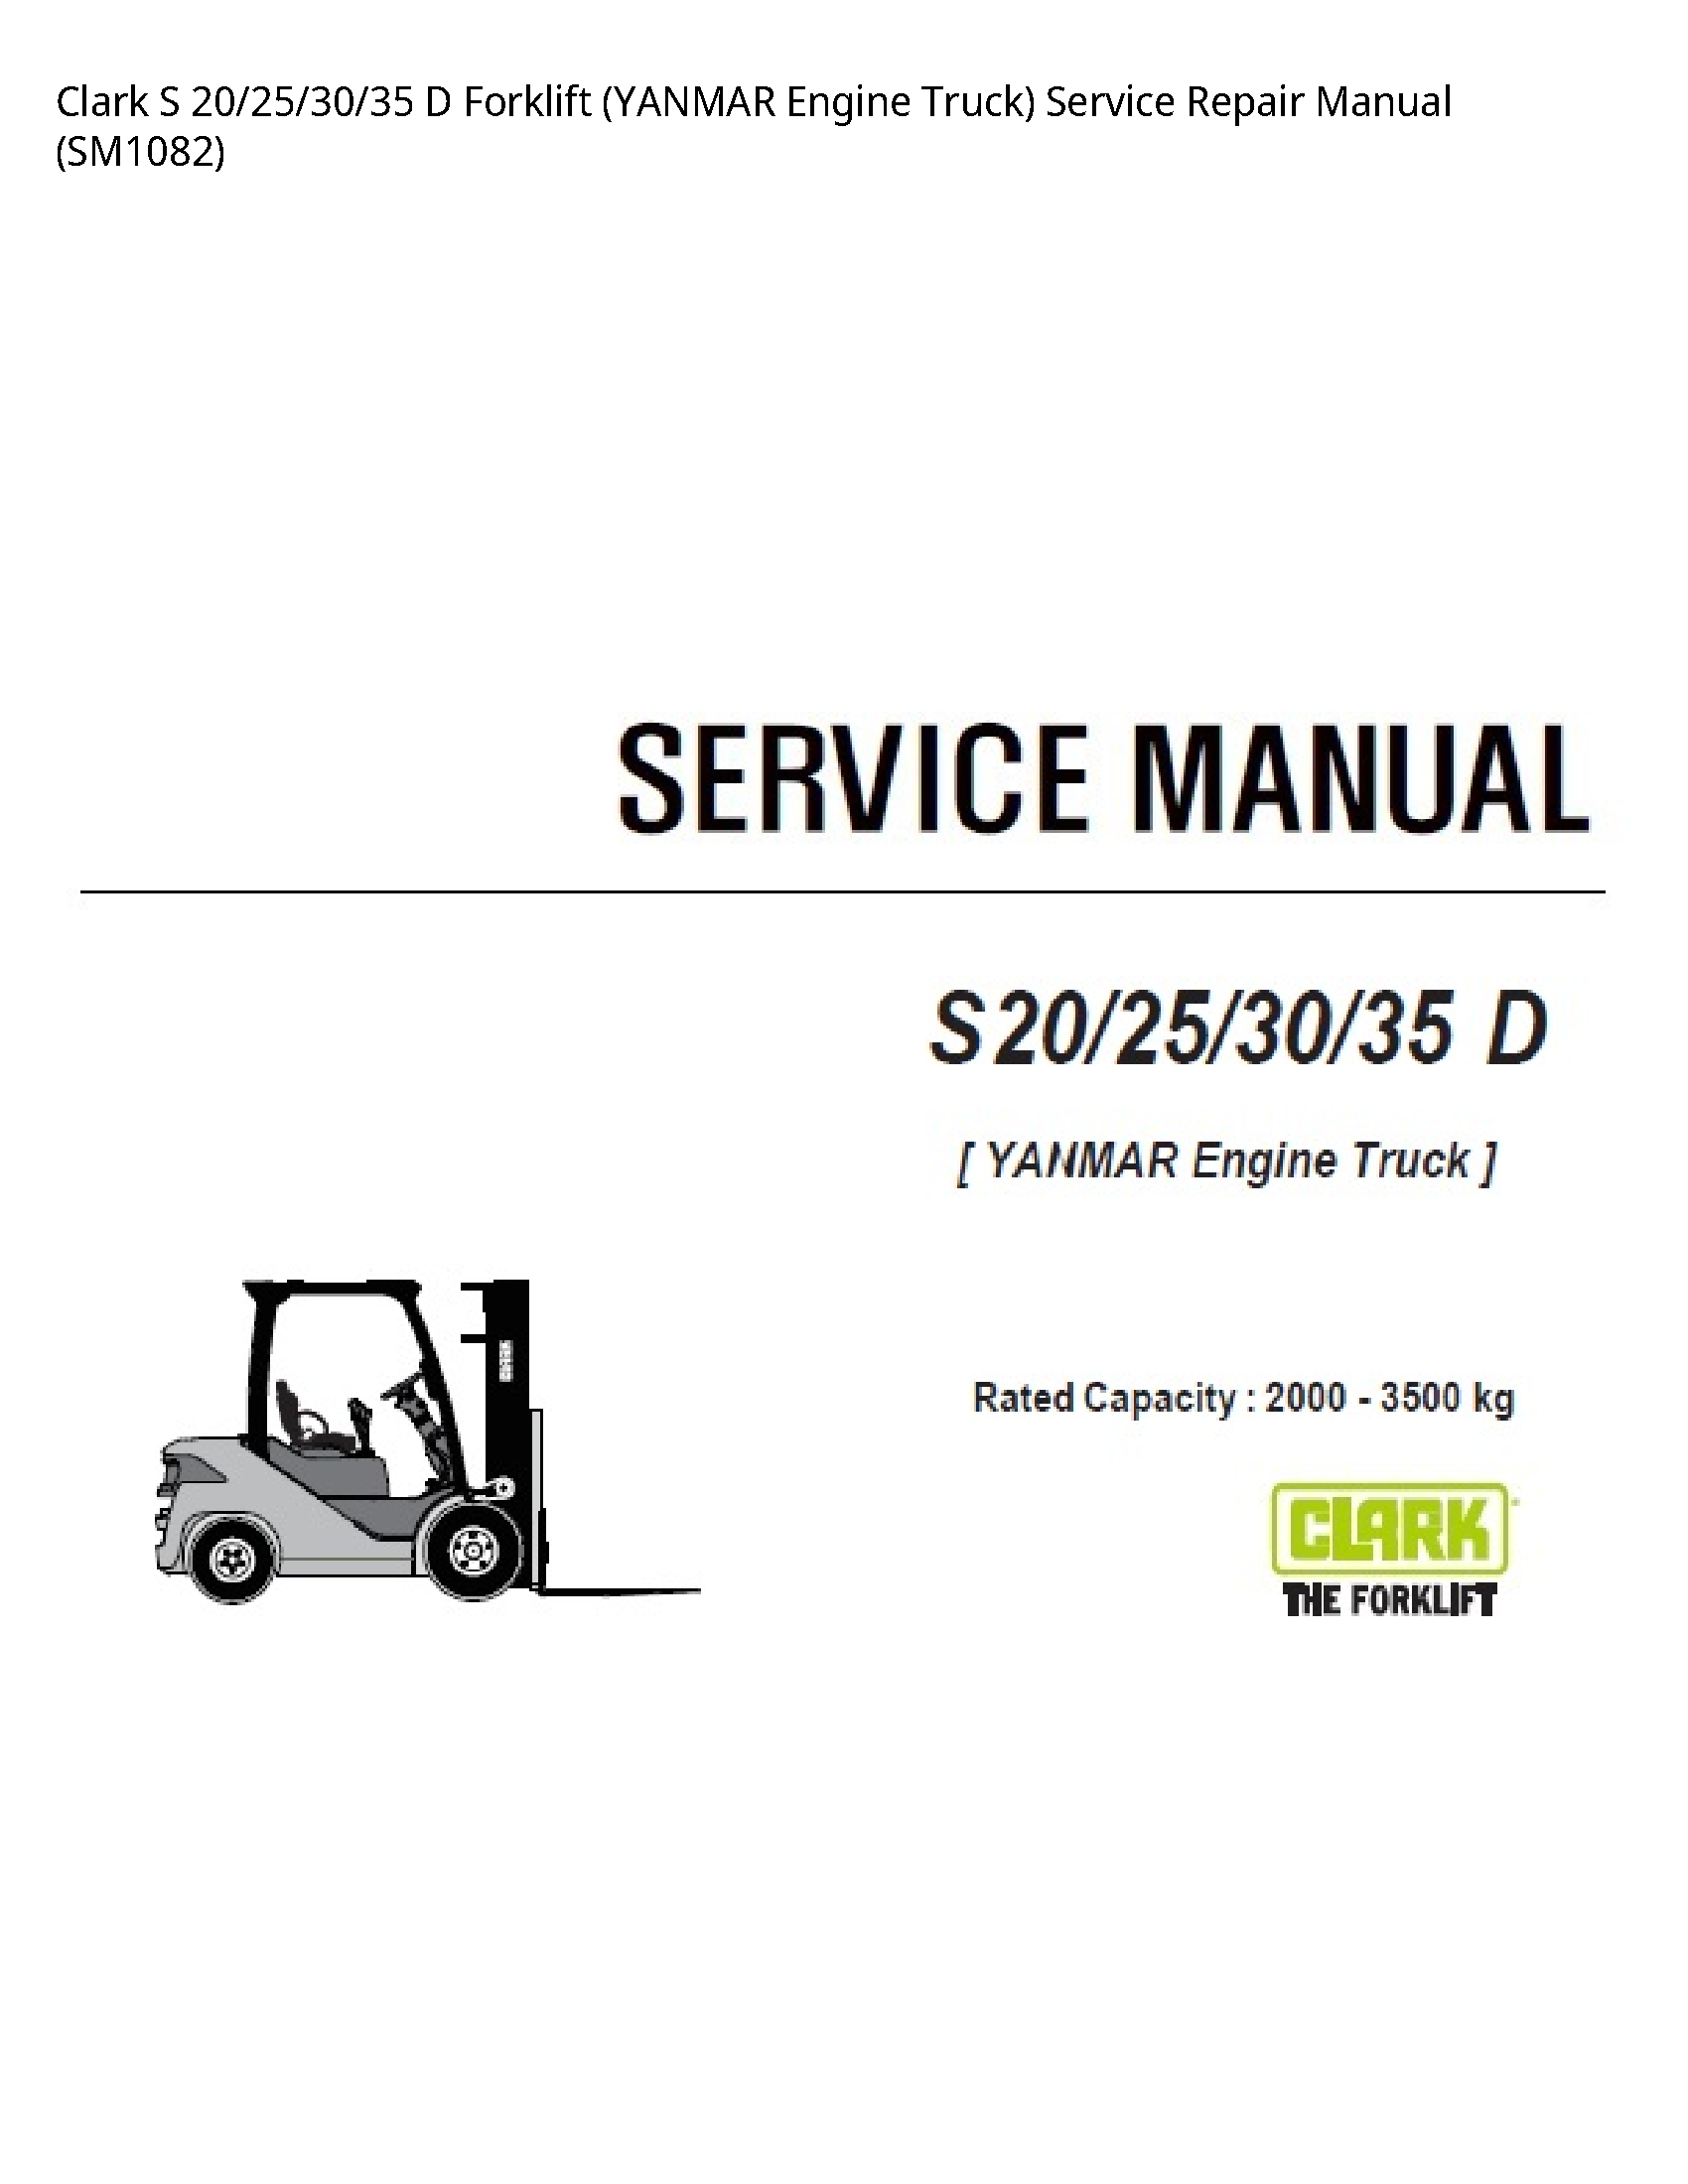 Clark 20 Forklift (YANMAR Engine Truck) manual